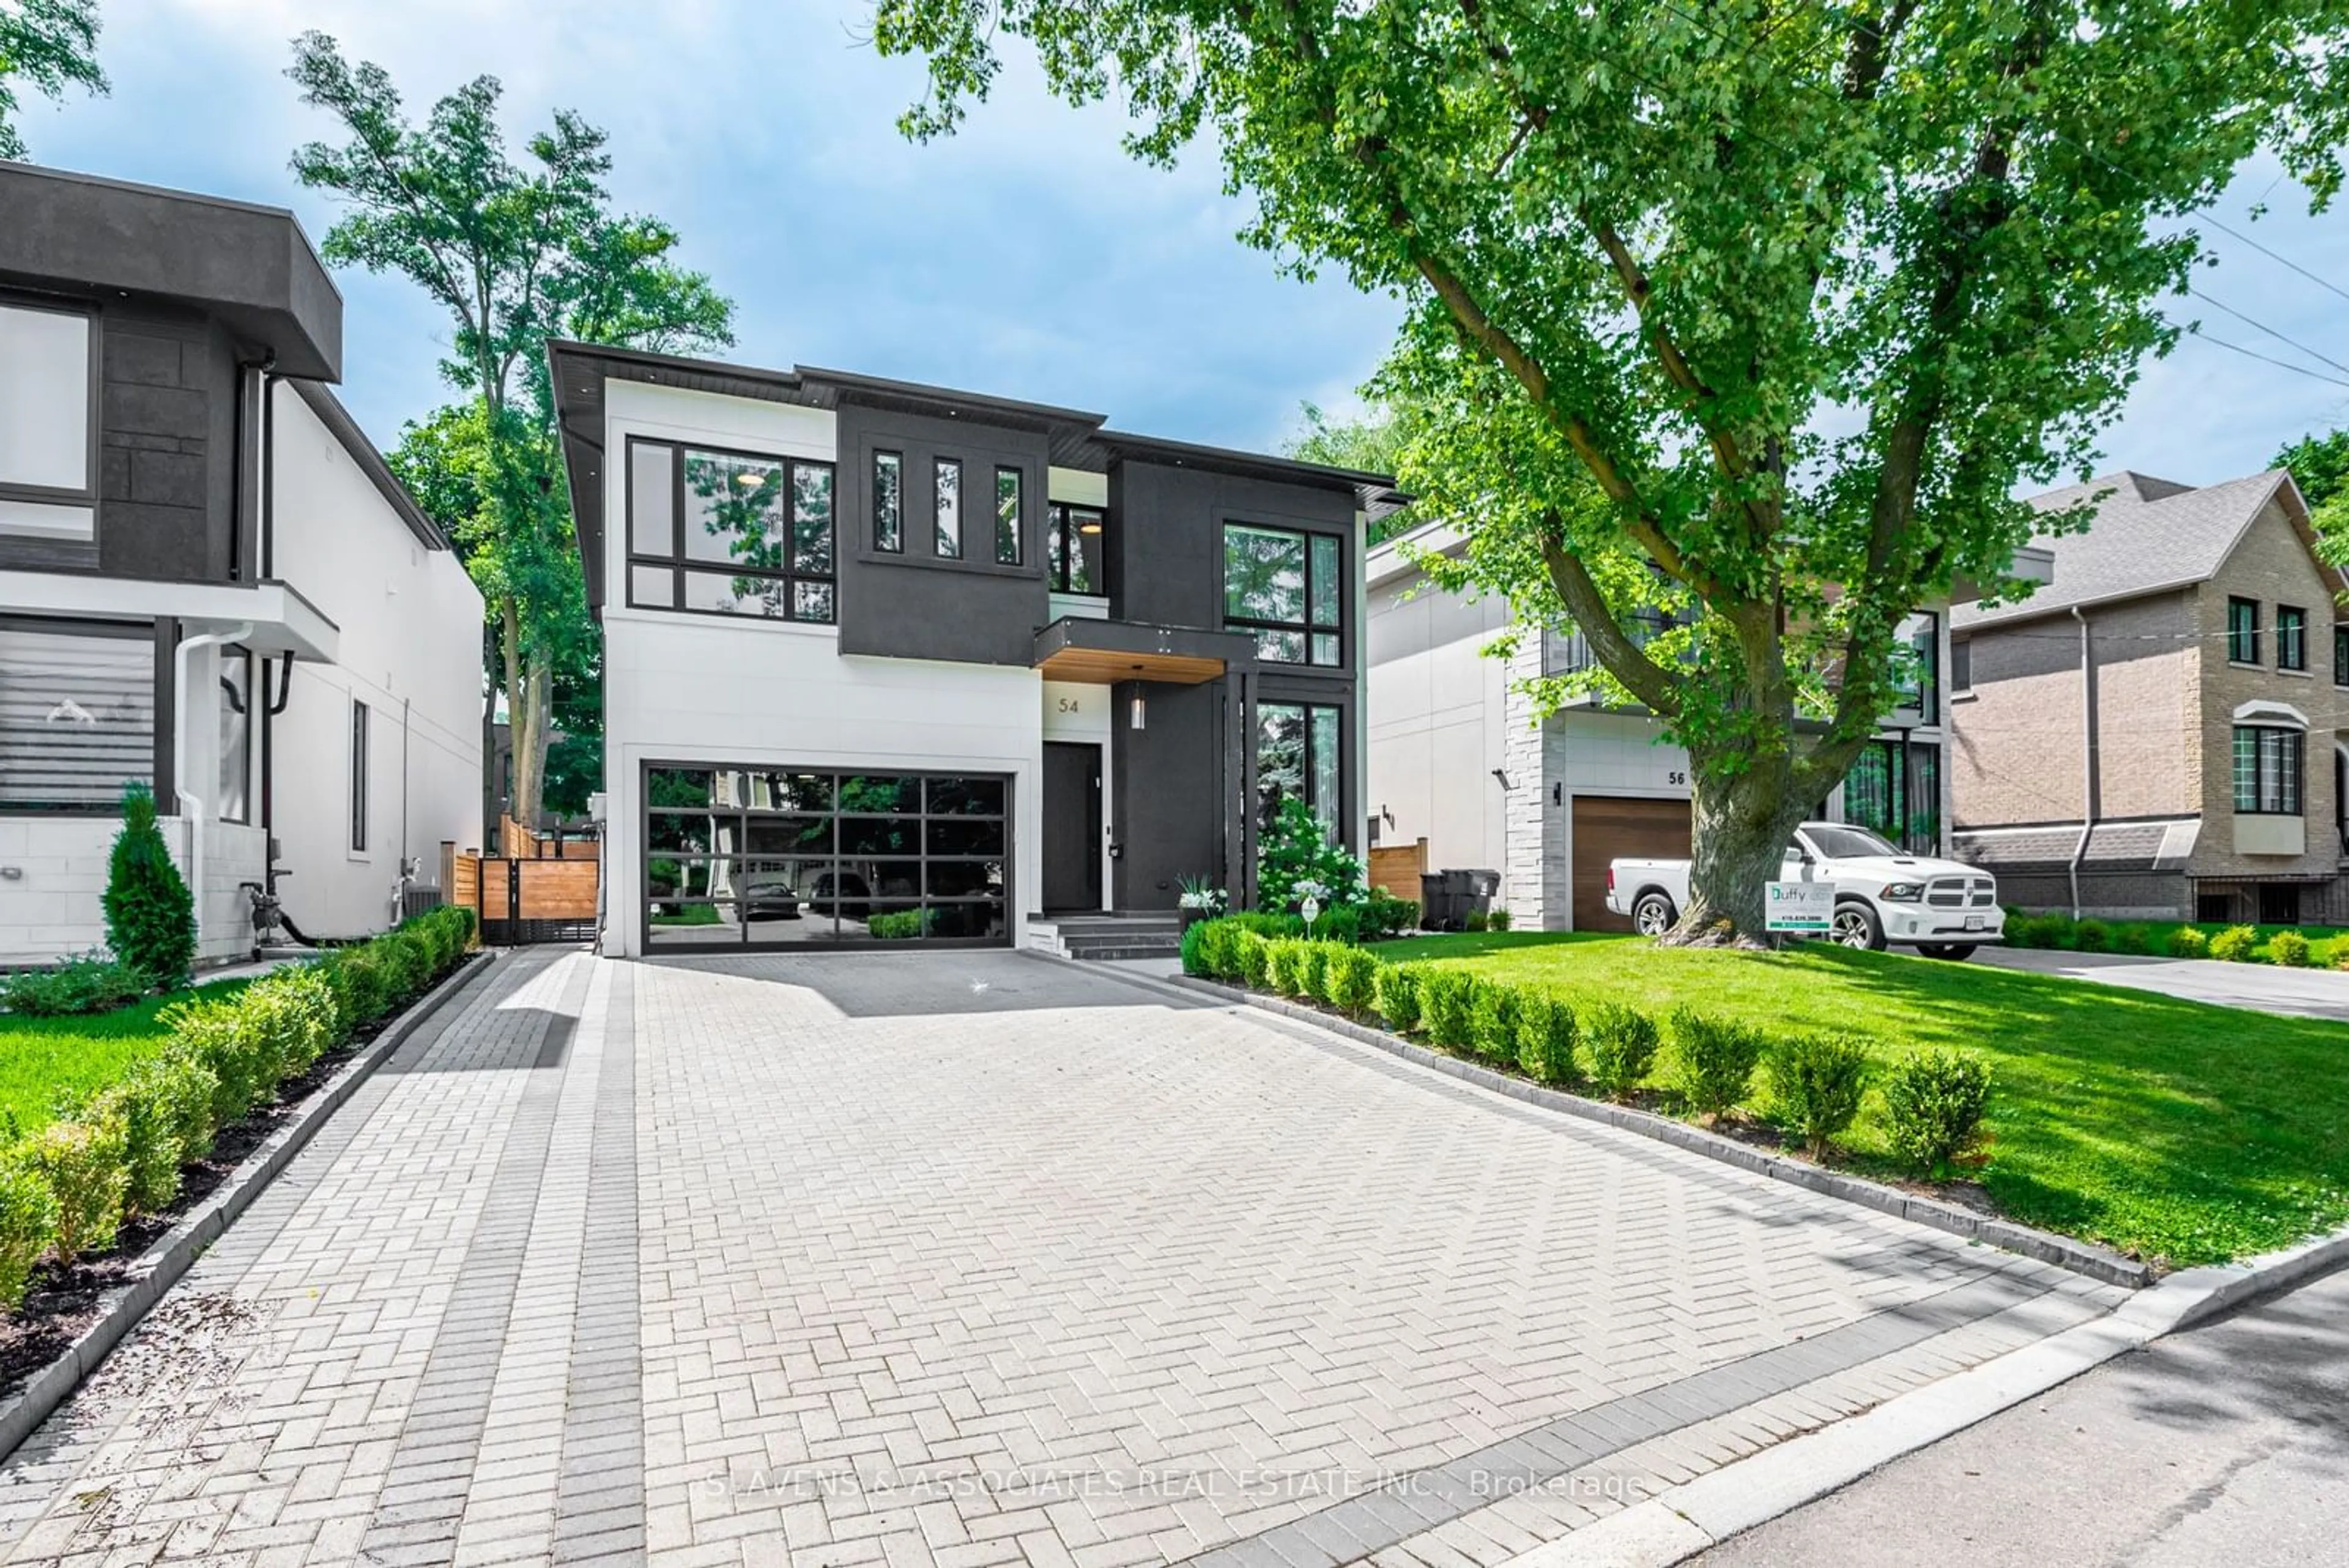 Home with brick exterior material for 54 Corwin Cres, Toronto Ontario M3H 2A1